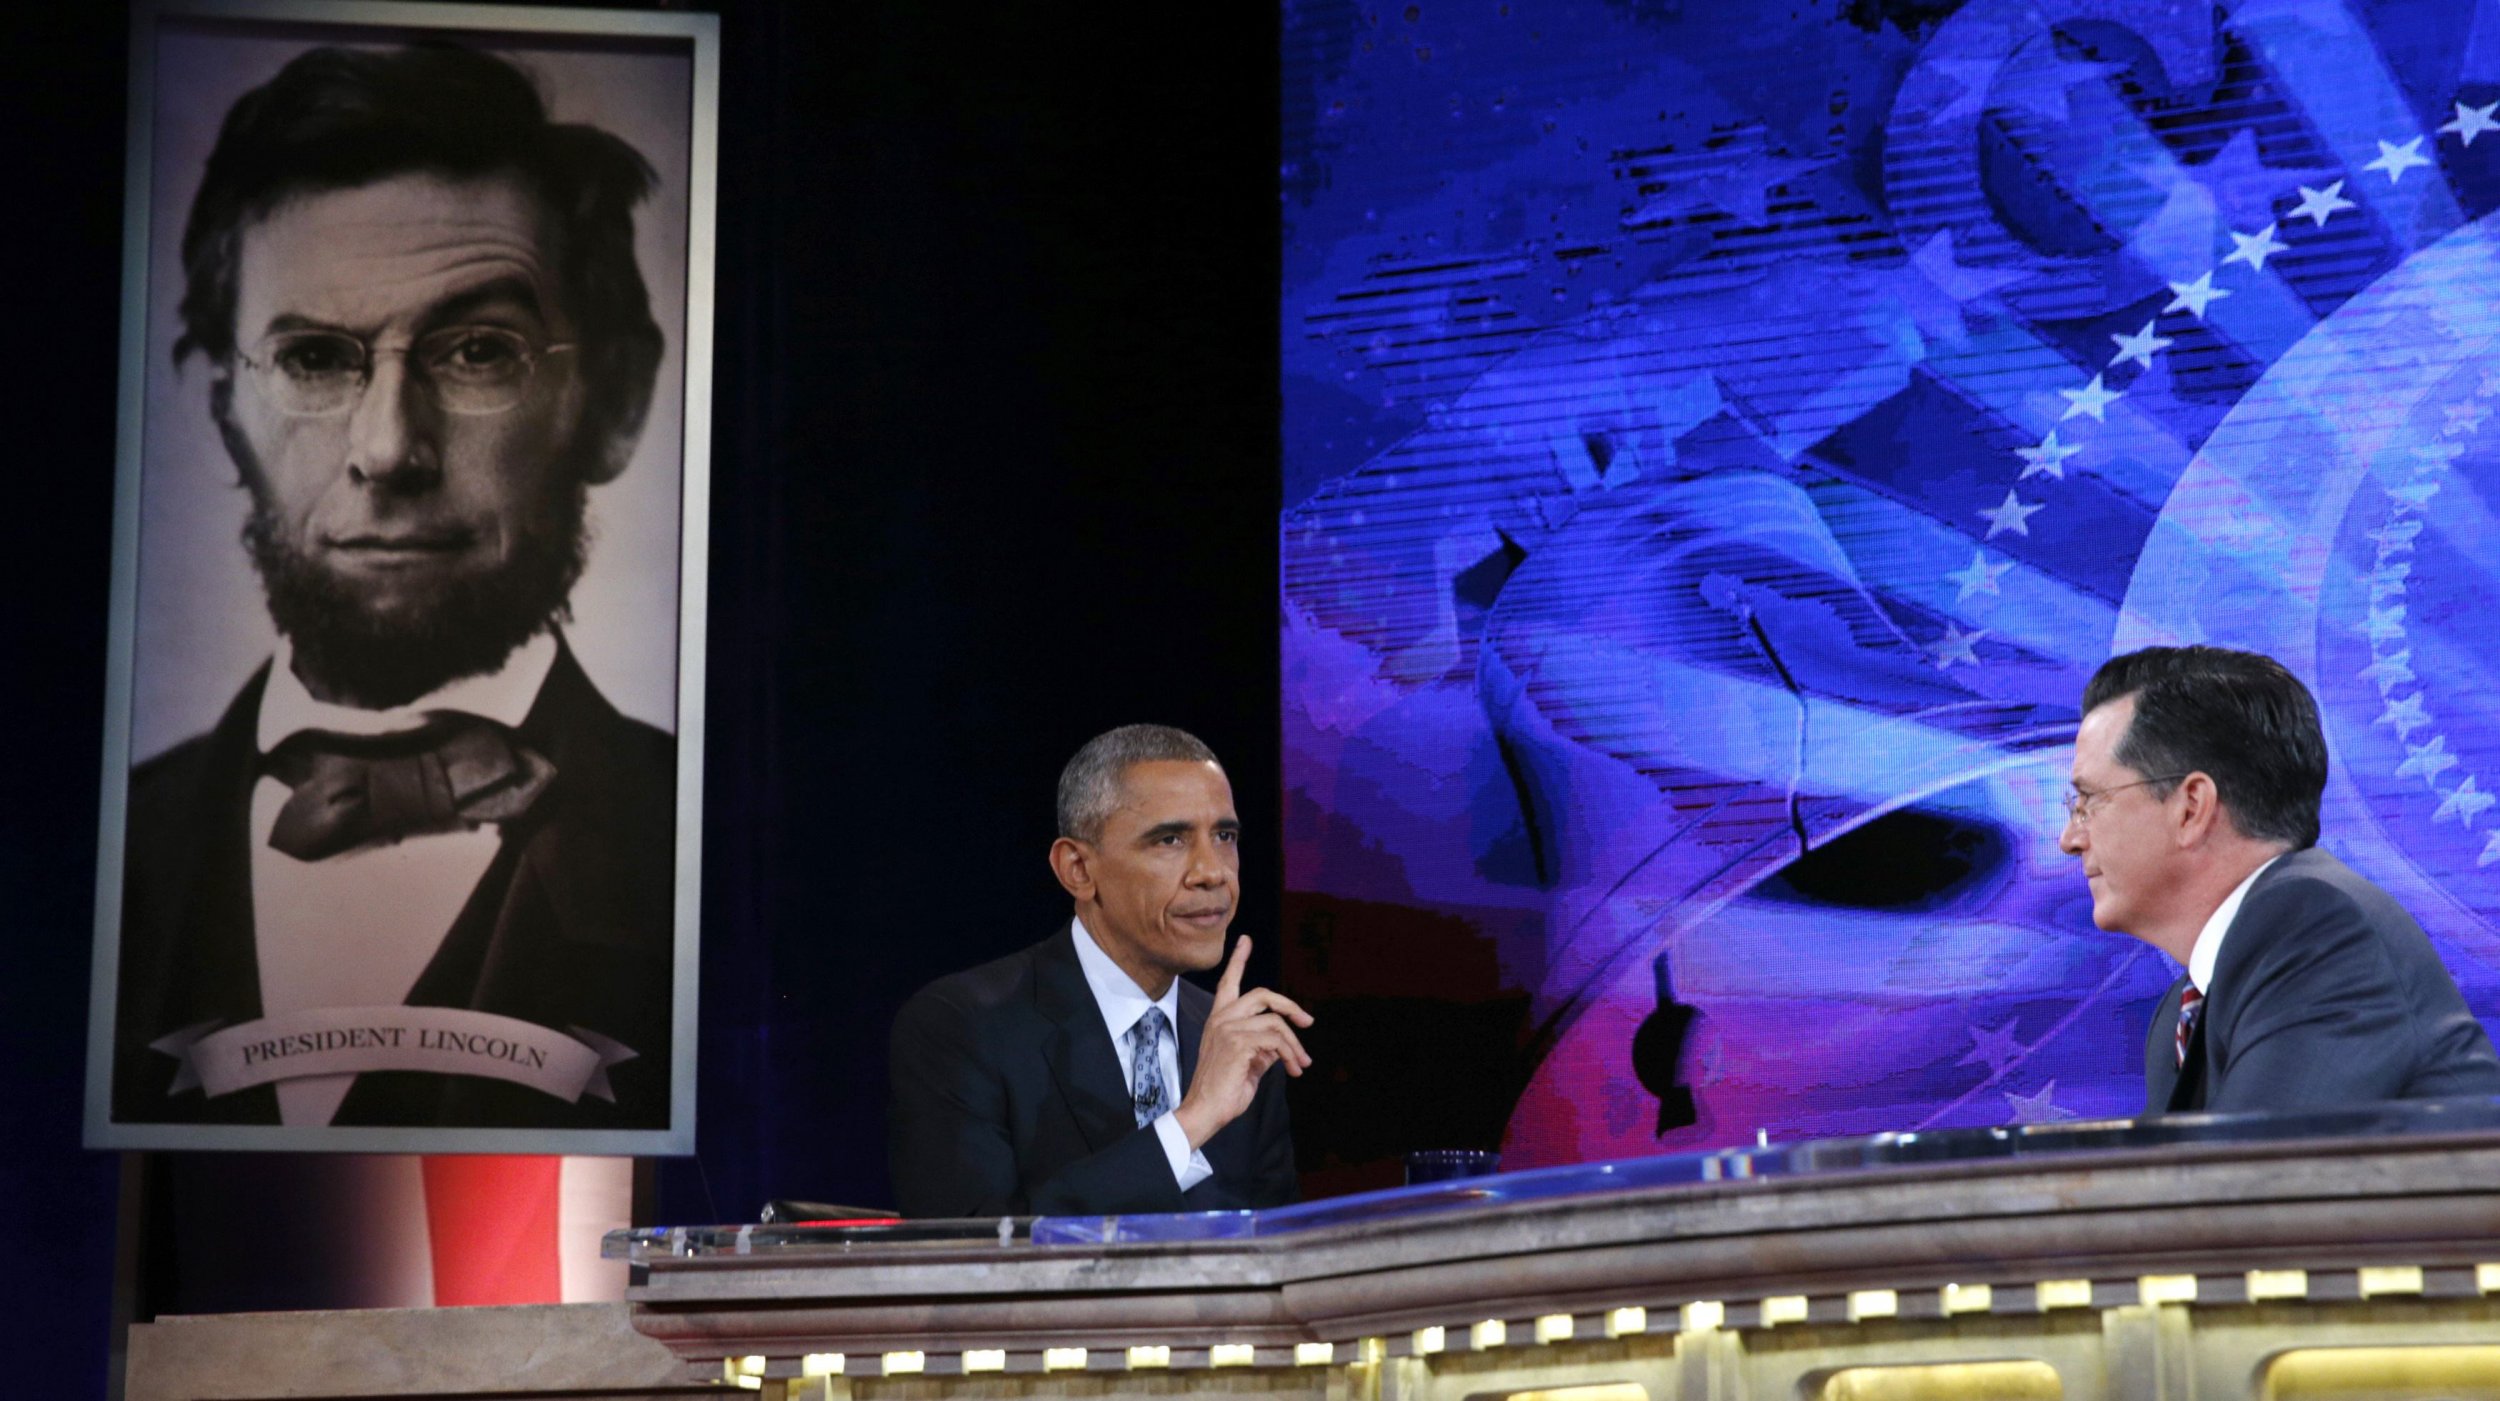 Obama on Colbert